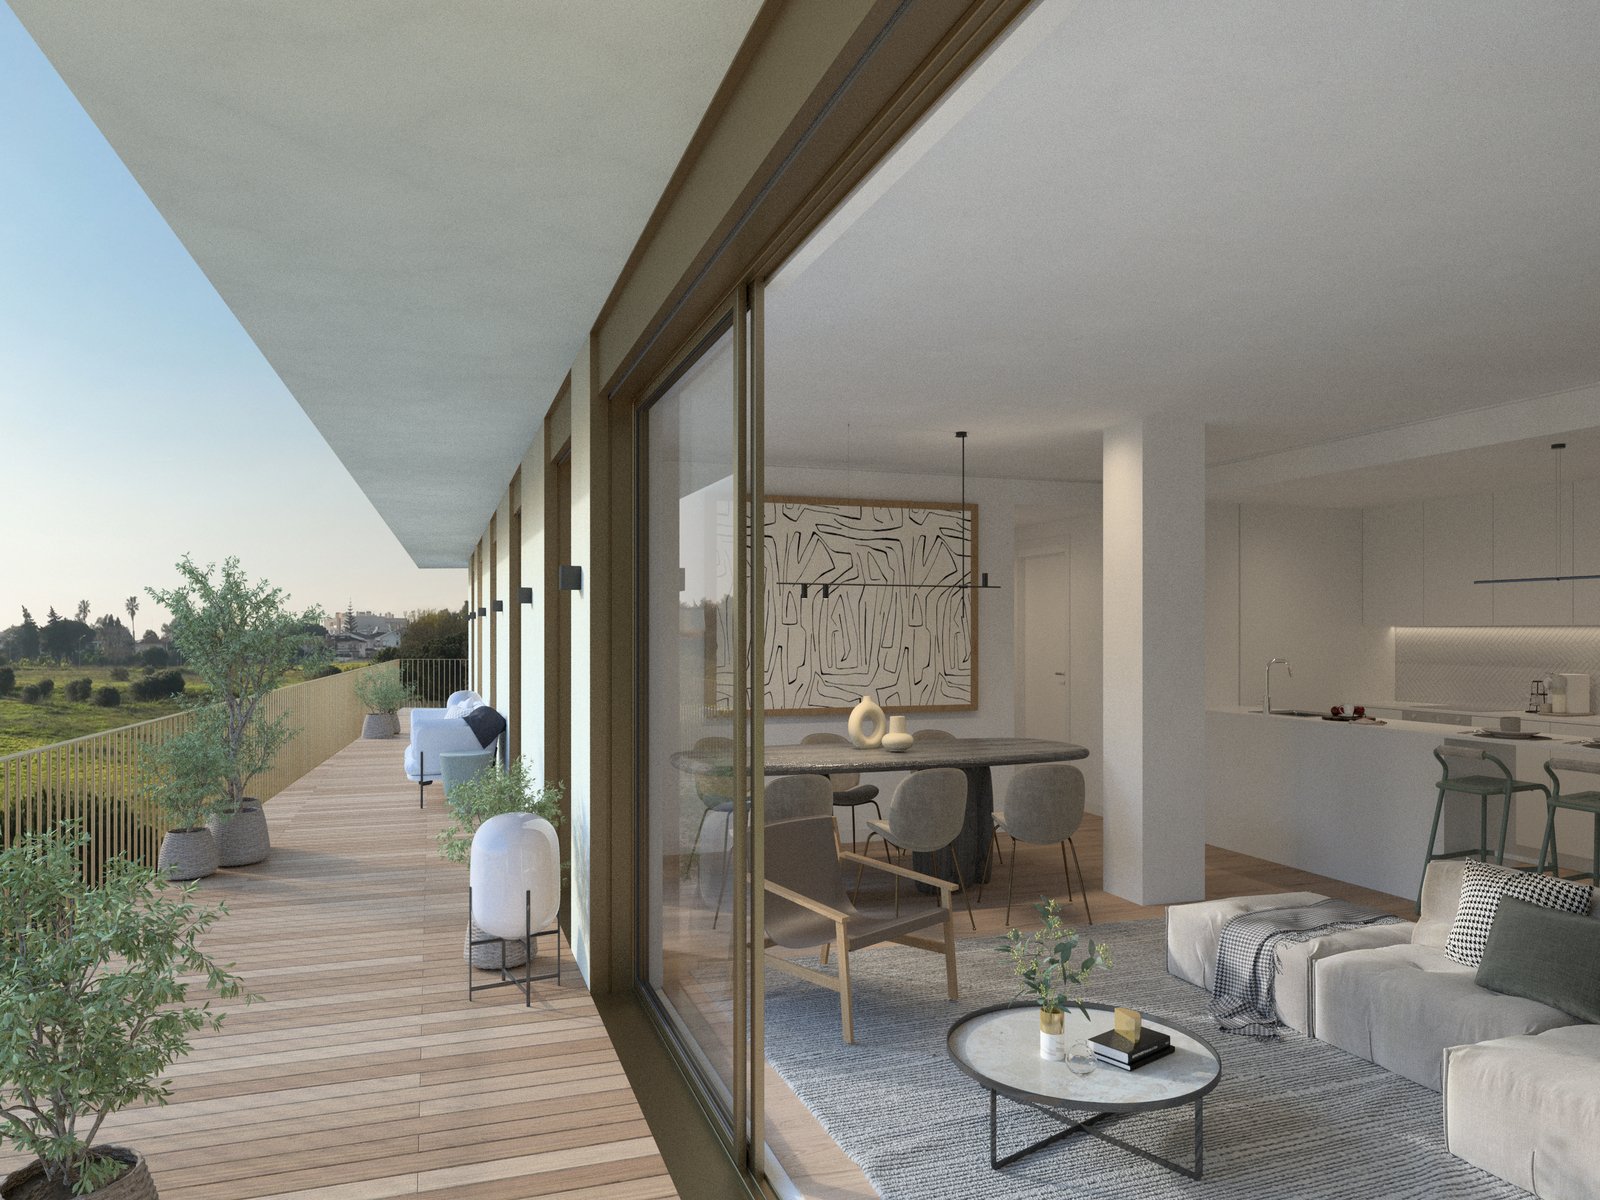 2 bedroom apartment with balcony in new development in Miraflores 2052961900